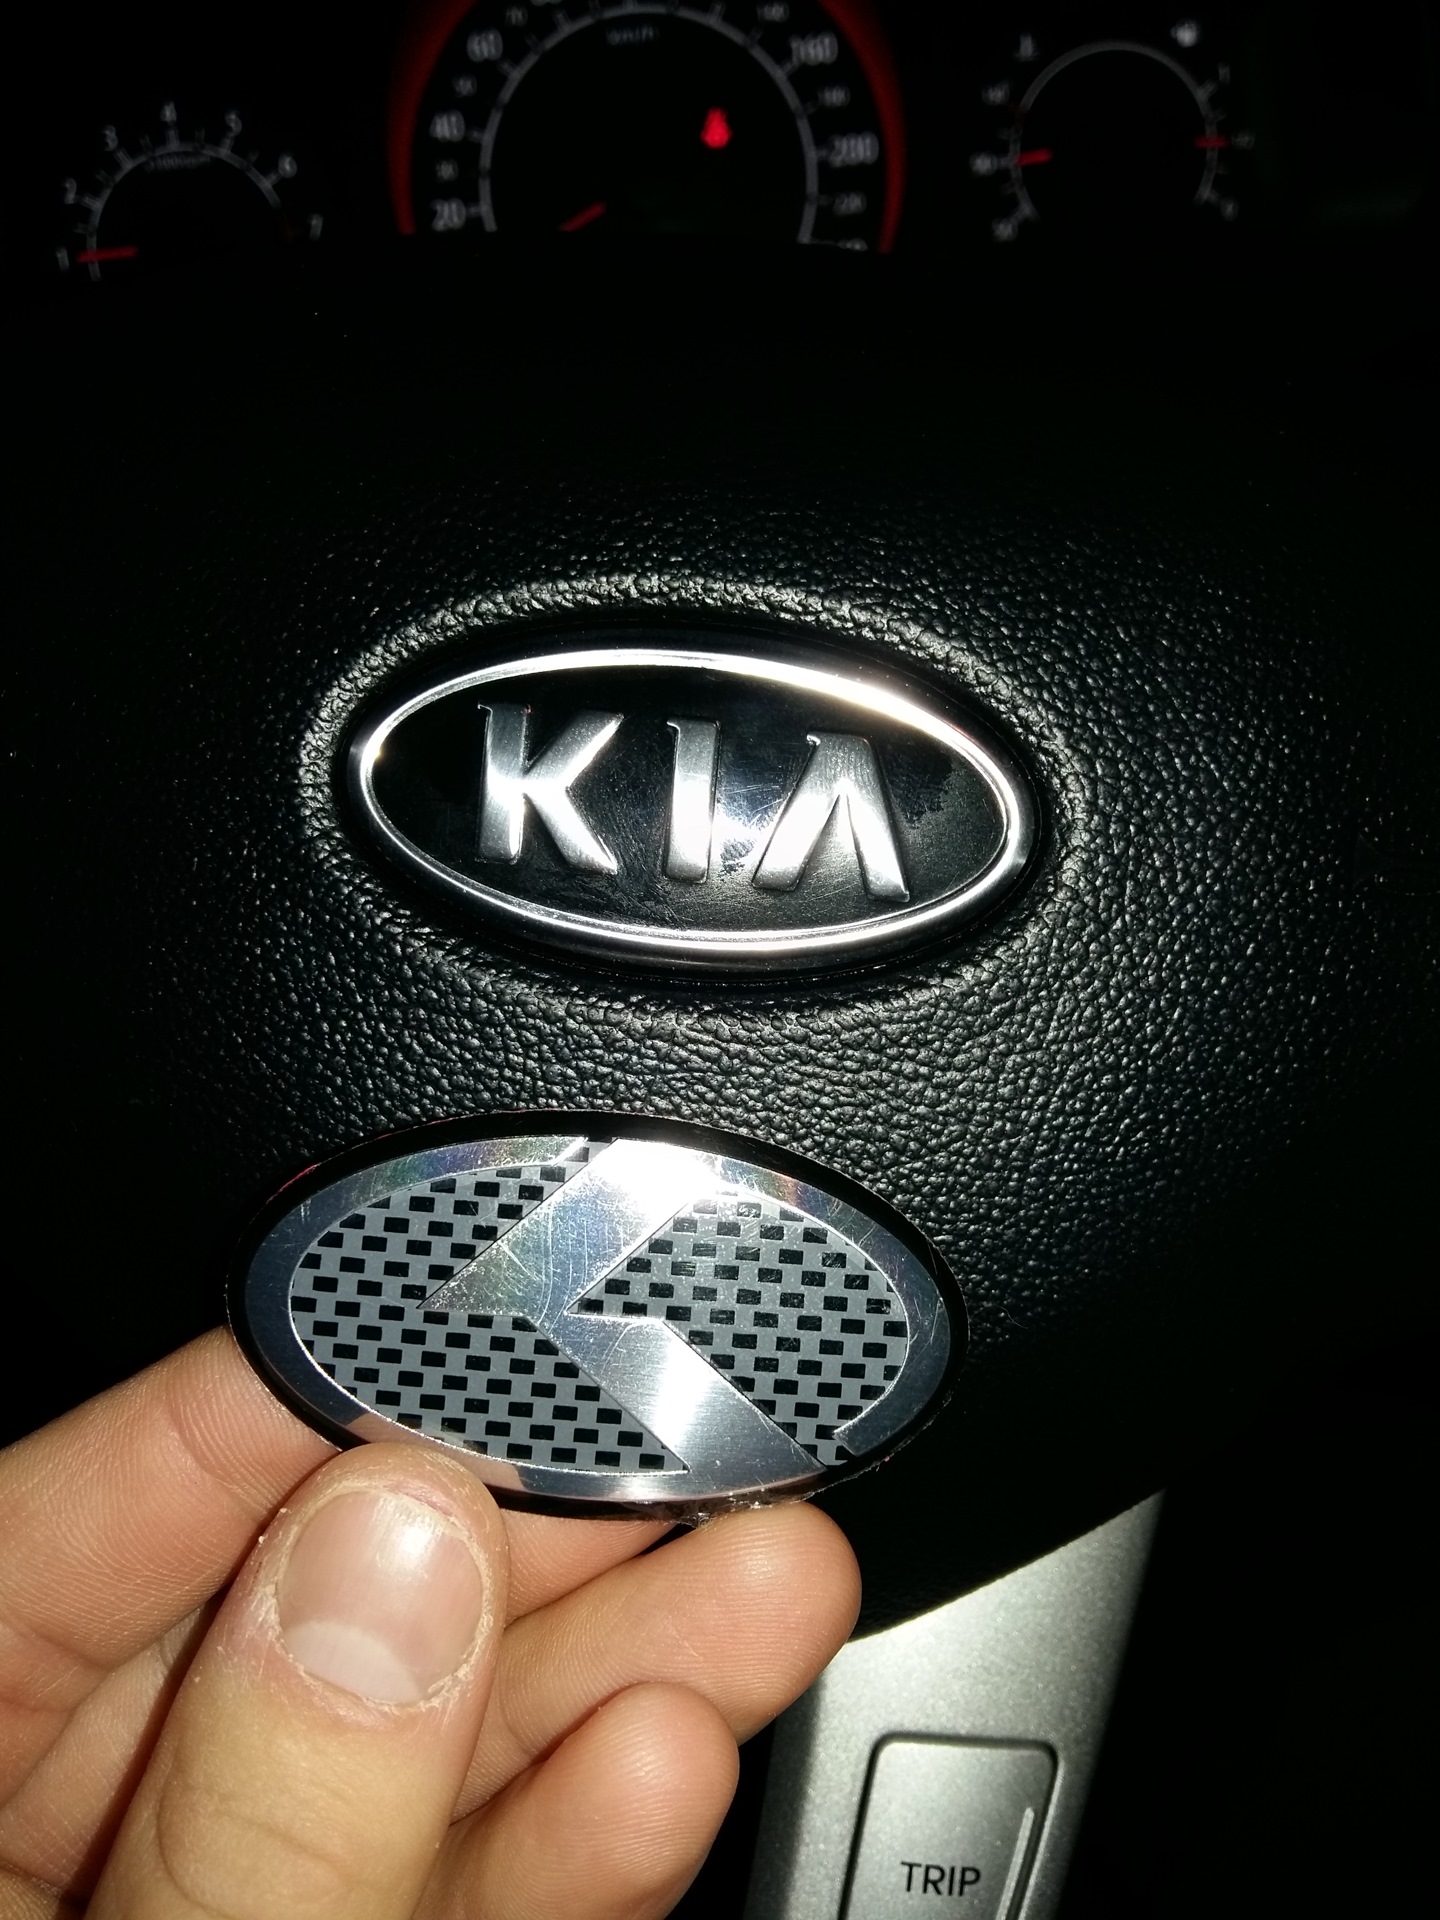 Значки киа сид. Kia Ceed 2011 значки на руле. Новая эмблема Kia Ceed 1 ed. Новый значок Киа на Kia Ceed 1 ed. Kia Ceed 2 шильдик на руле.